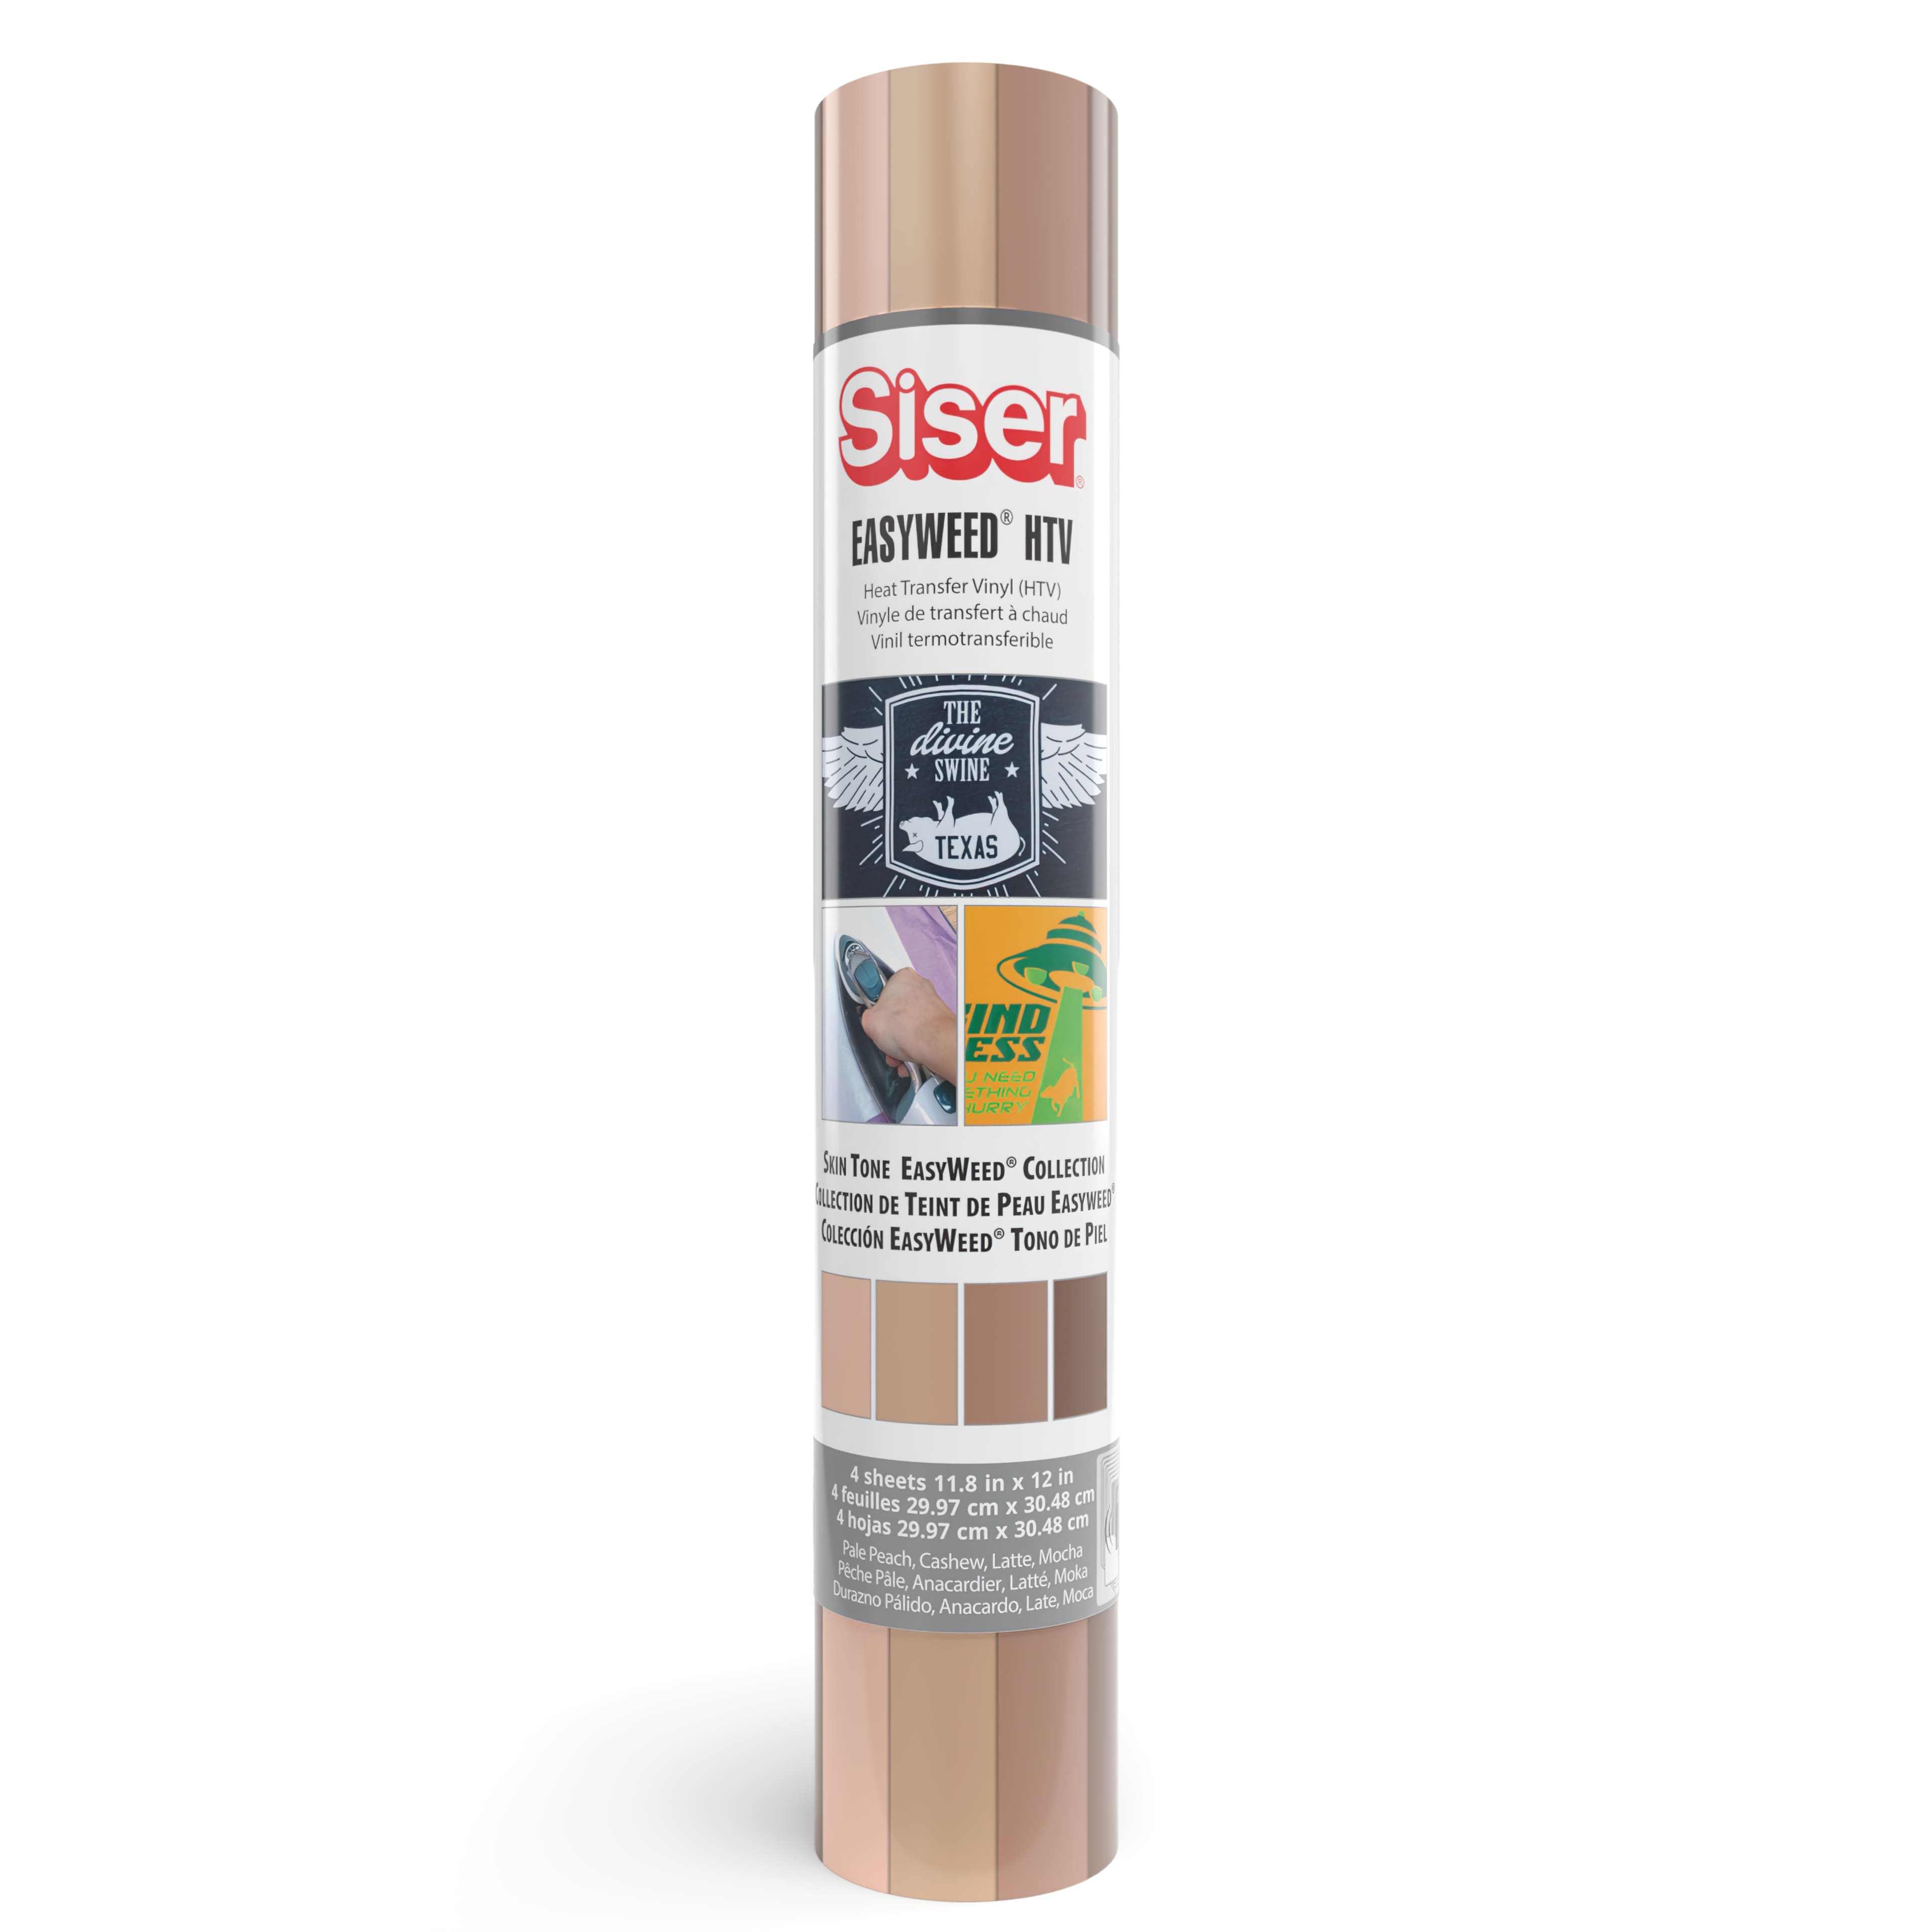 8 Packs: 4 ct. (32 total) Siser® EasyWeed® Heat Transfer Vinyl, Skin Tones  Sampler